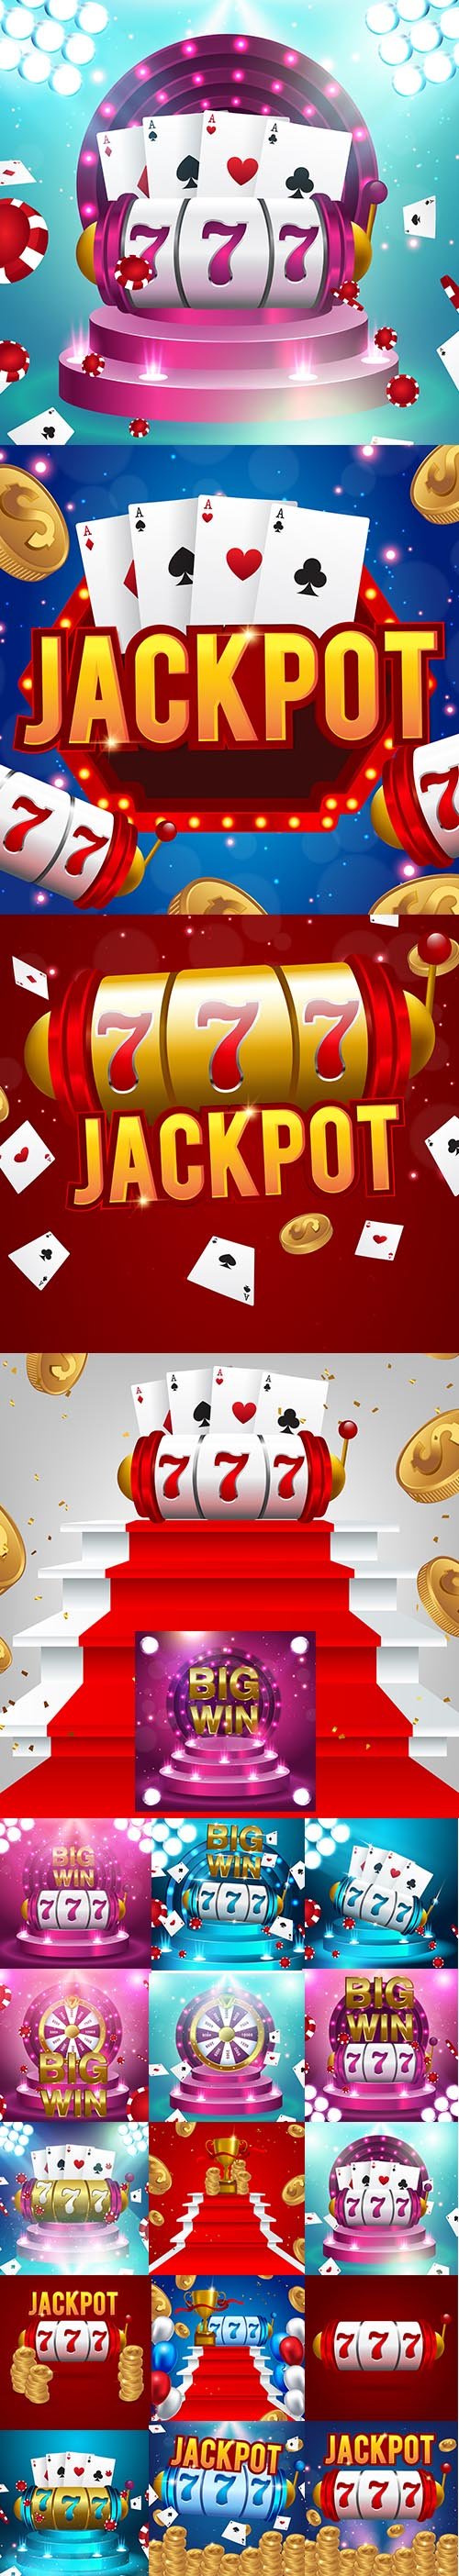 Big Win Slots 777 Banner Casino Concept